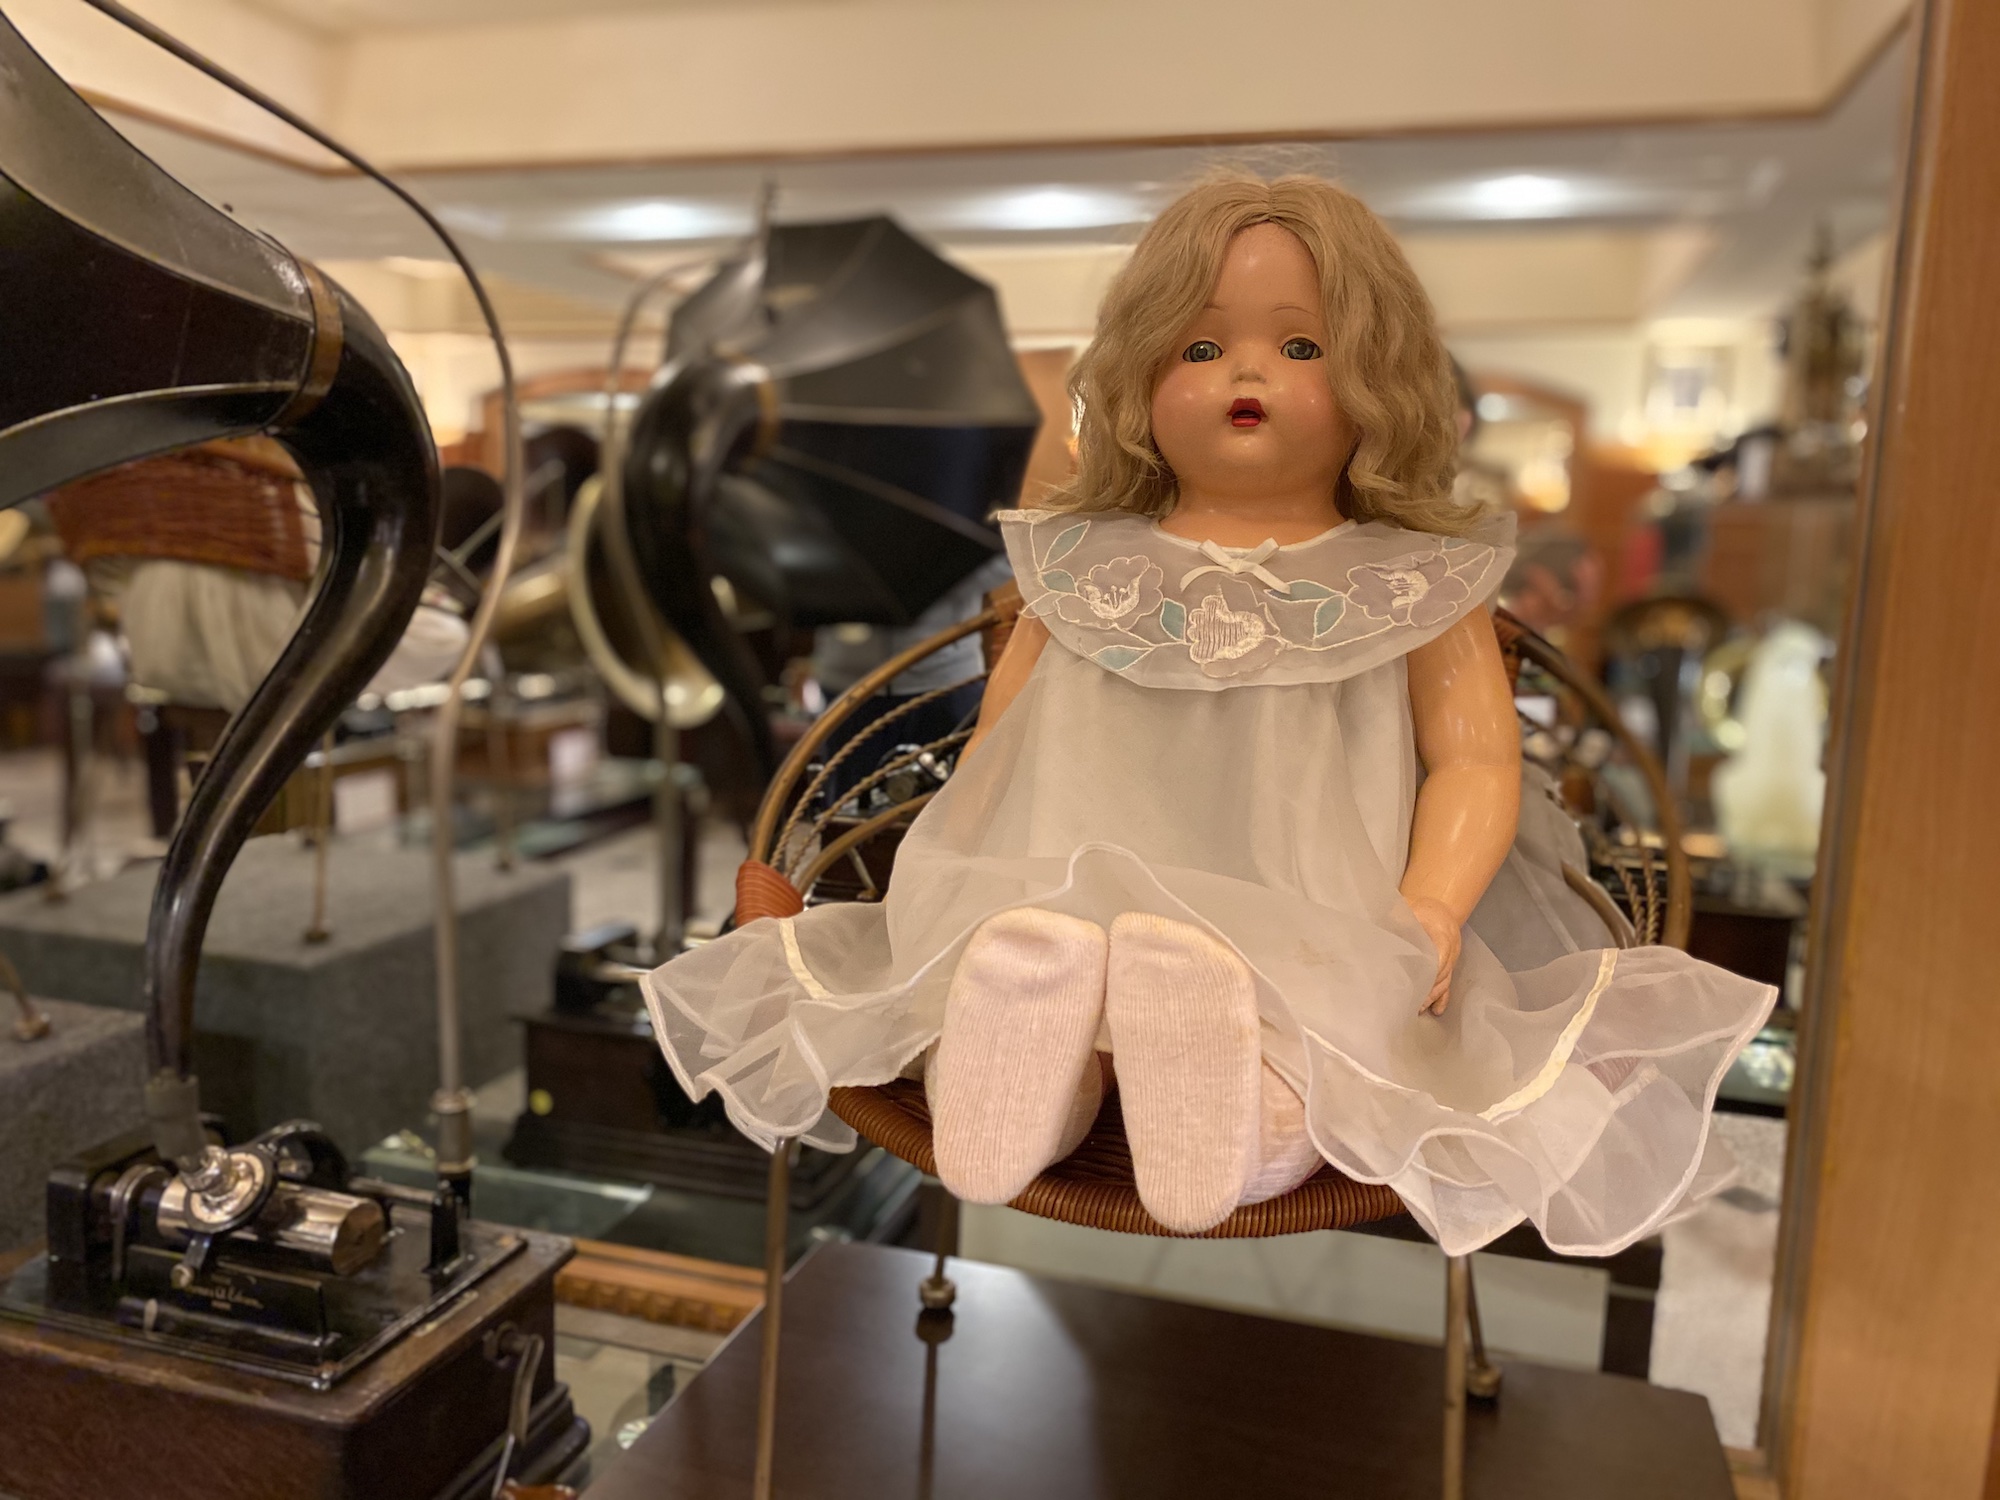 sound of century museum dolls